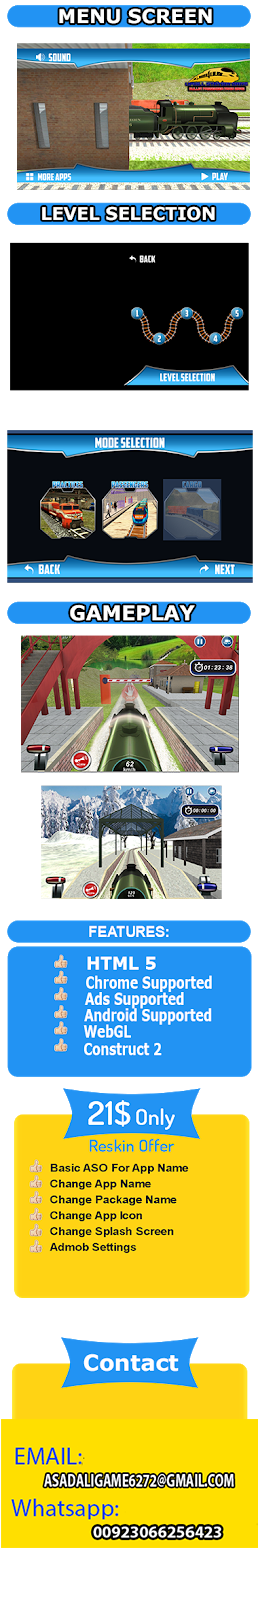 Metro train simulator arcade HTML5 game source code - 1